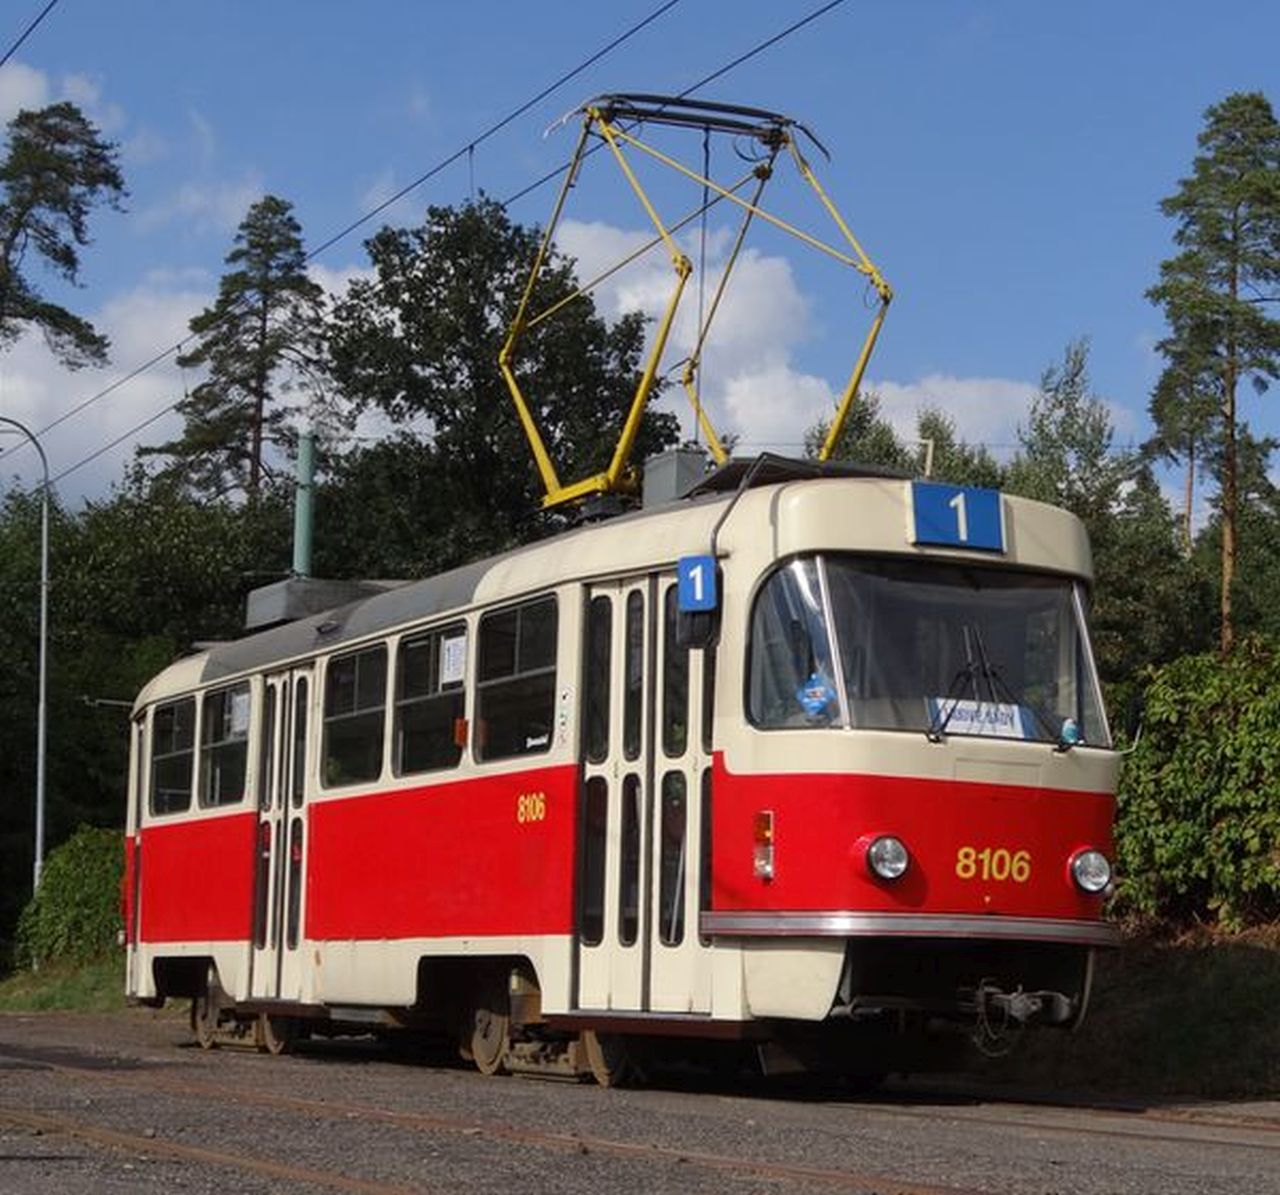 Tramvaj T3M v Liberci v Lidových sadech. Foto: Boveraclub